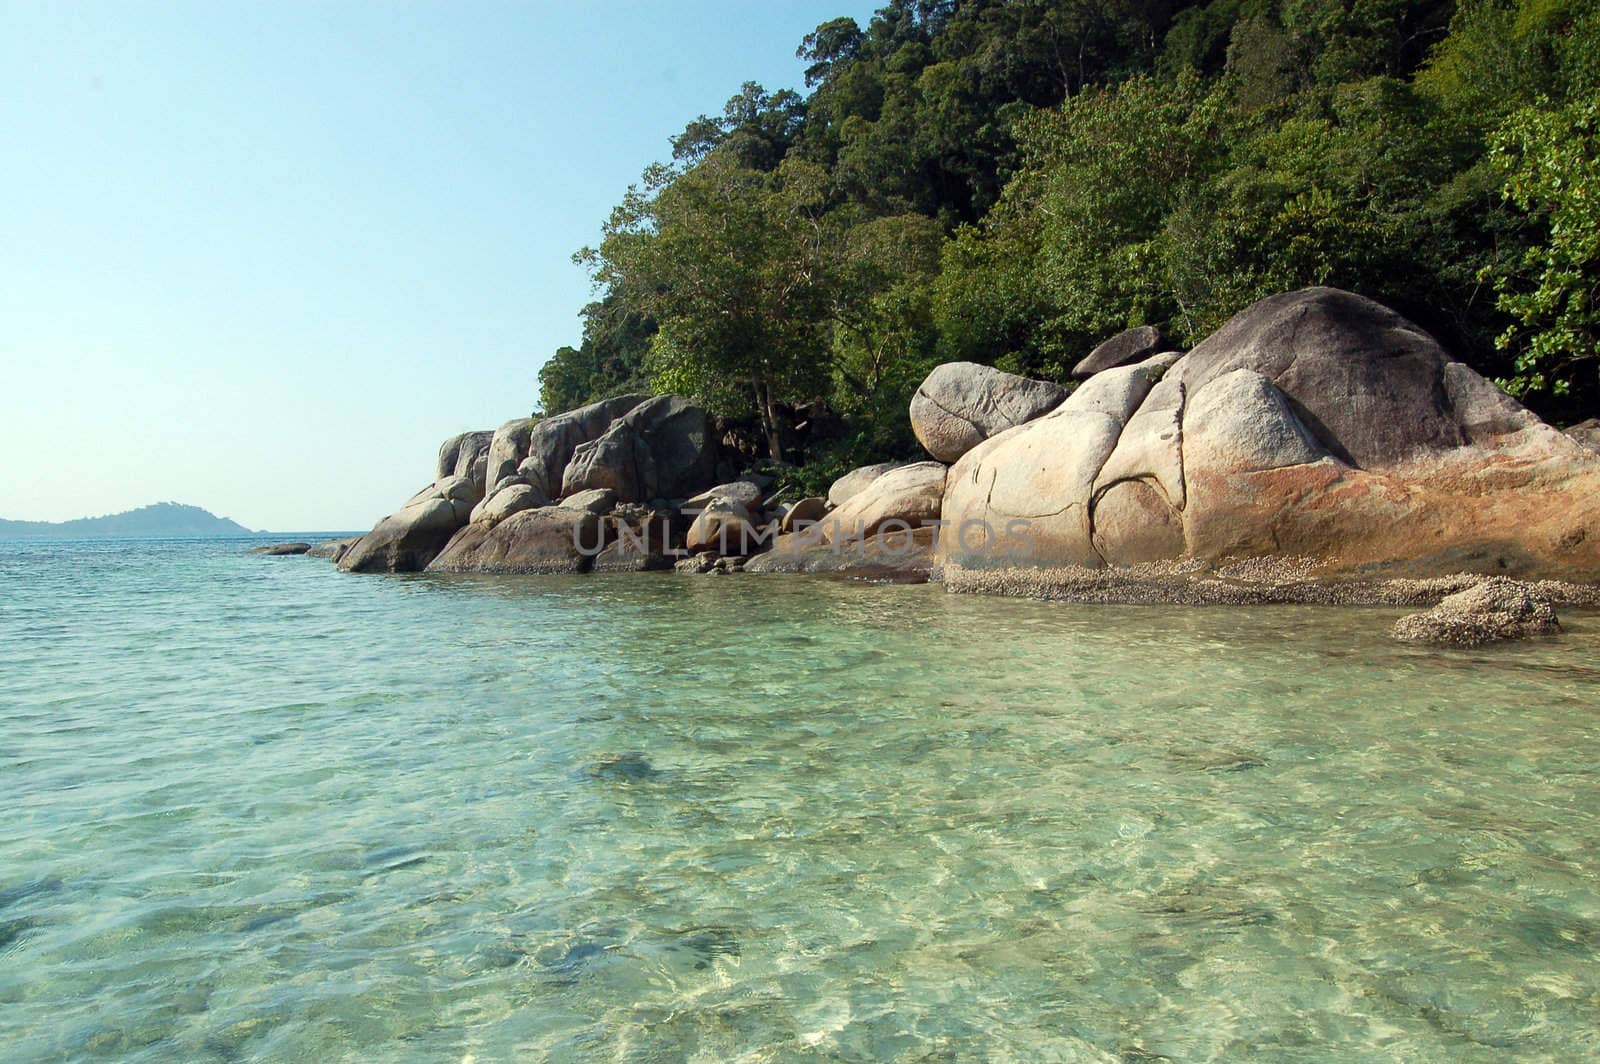 Fantastic blue sea - Perhentian island - Best of Malaysia